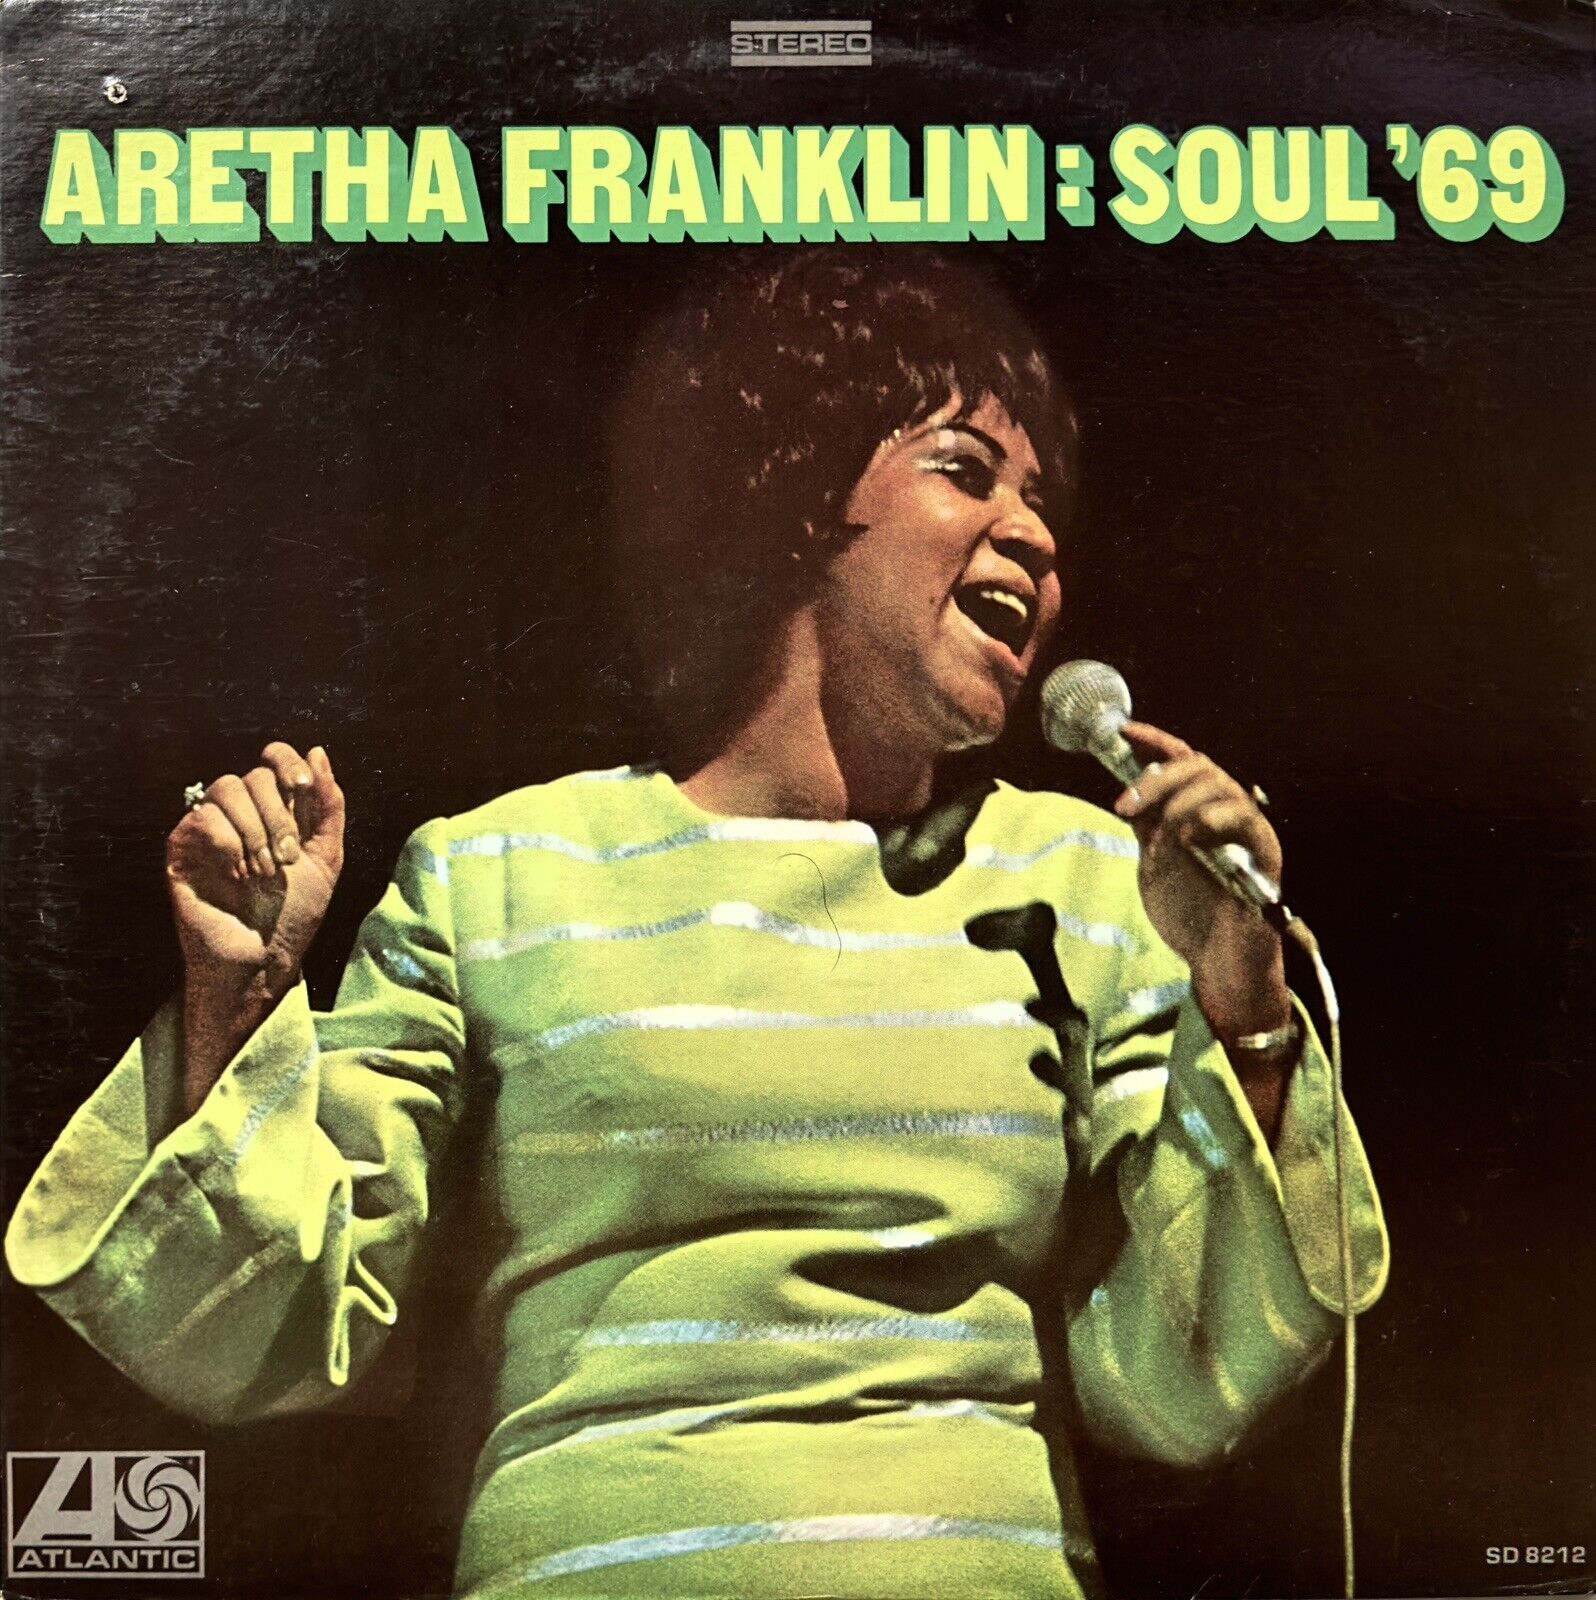 Aretha Franklin - Soul ‘69 FIRST PRESSING Vinyl LP 1969 Atlantic SD 8212